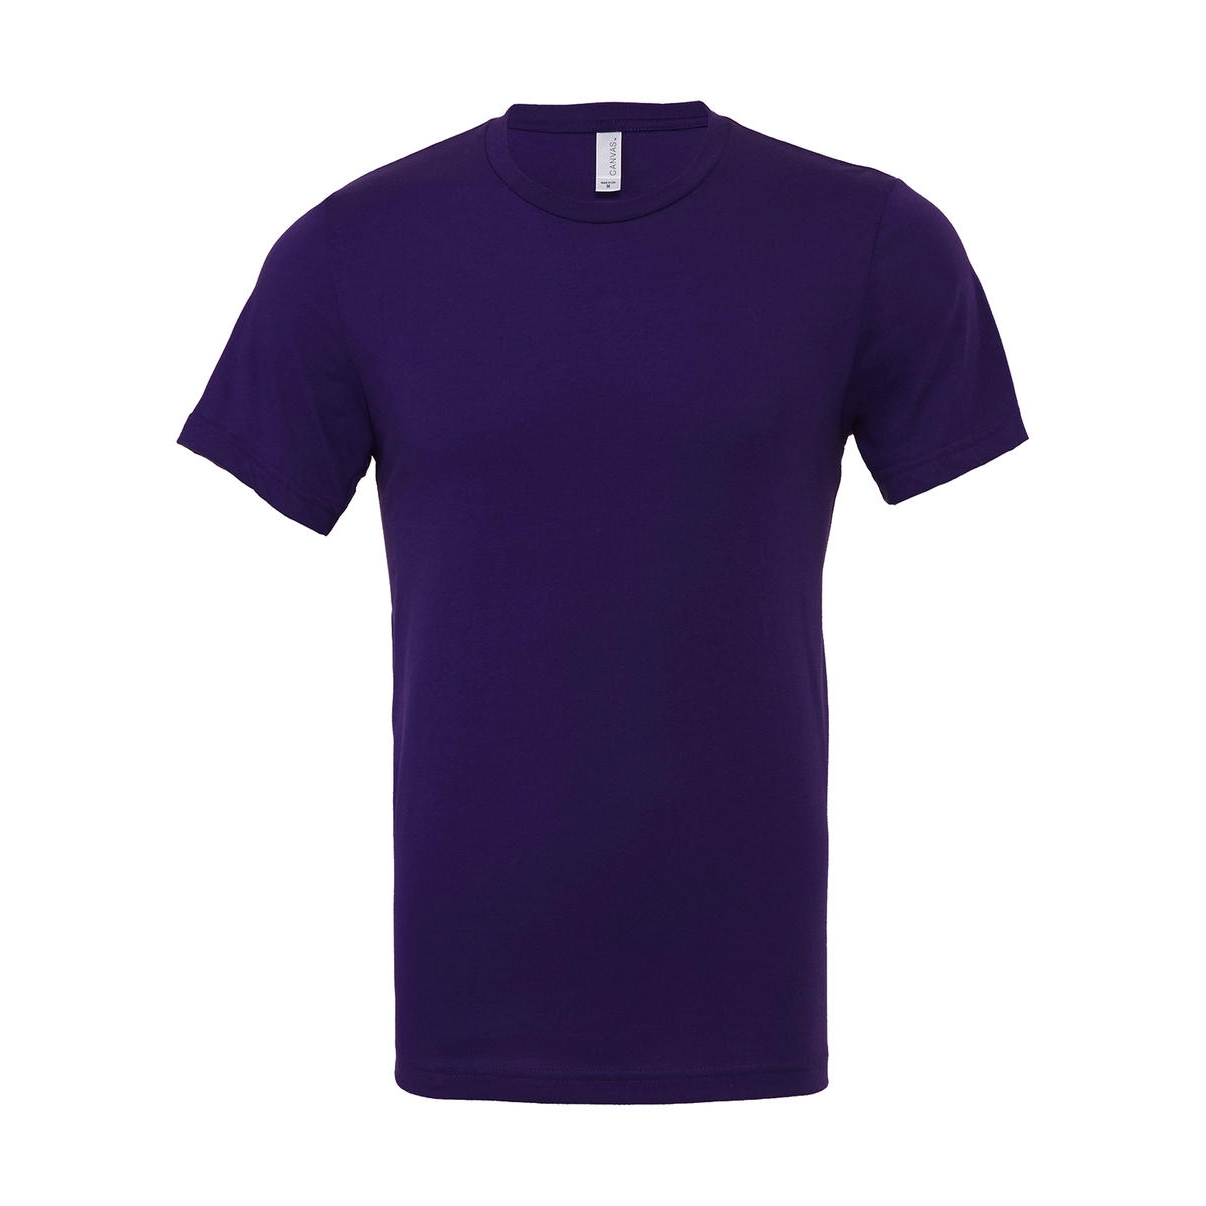 Tričko Bella Jersey - fialové, XL